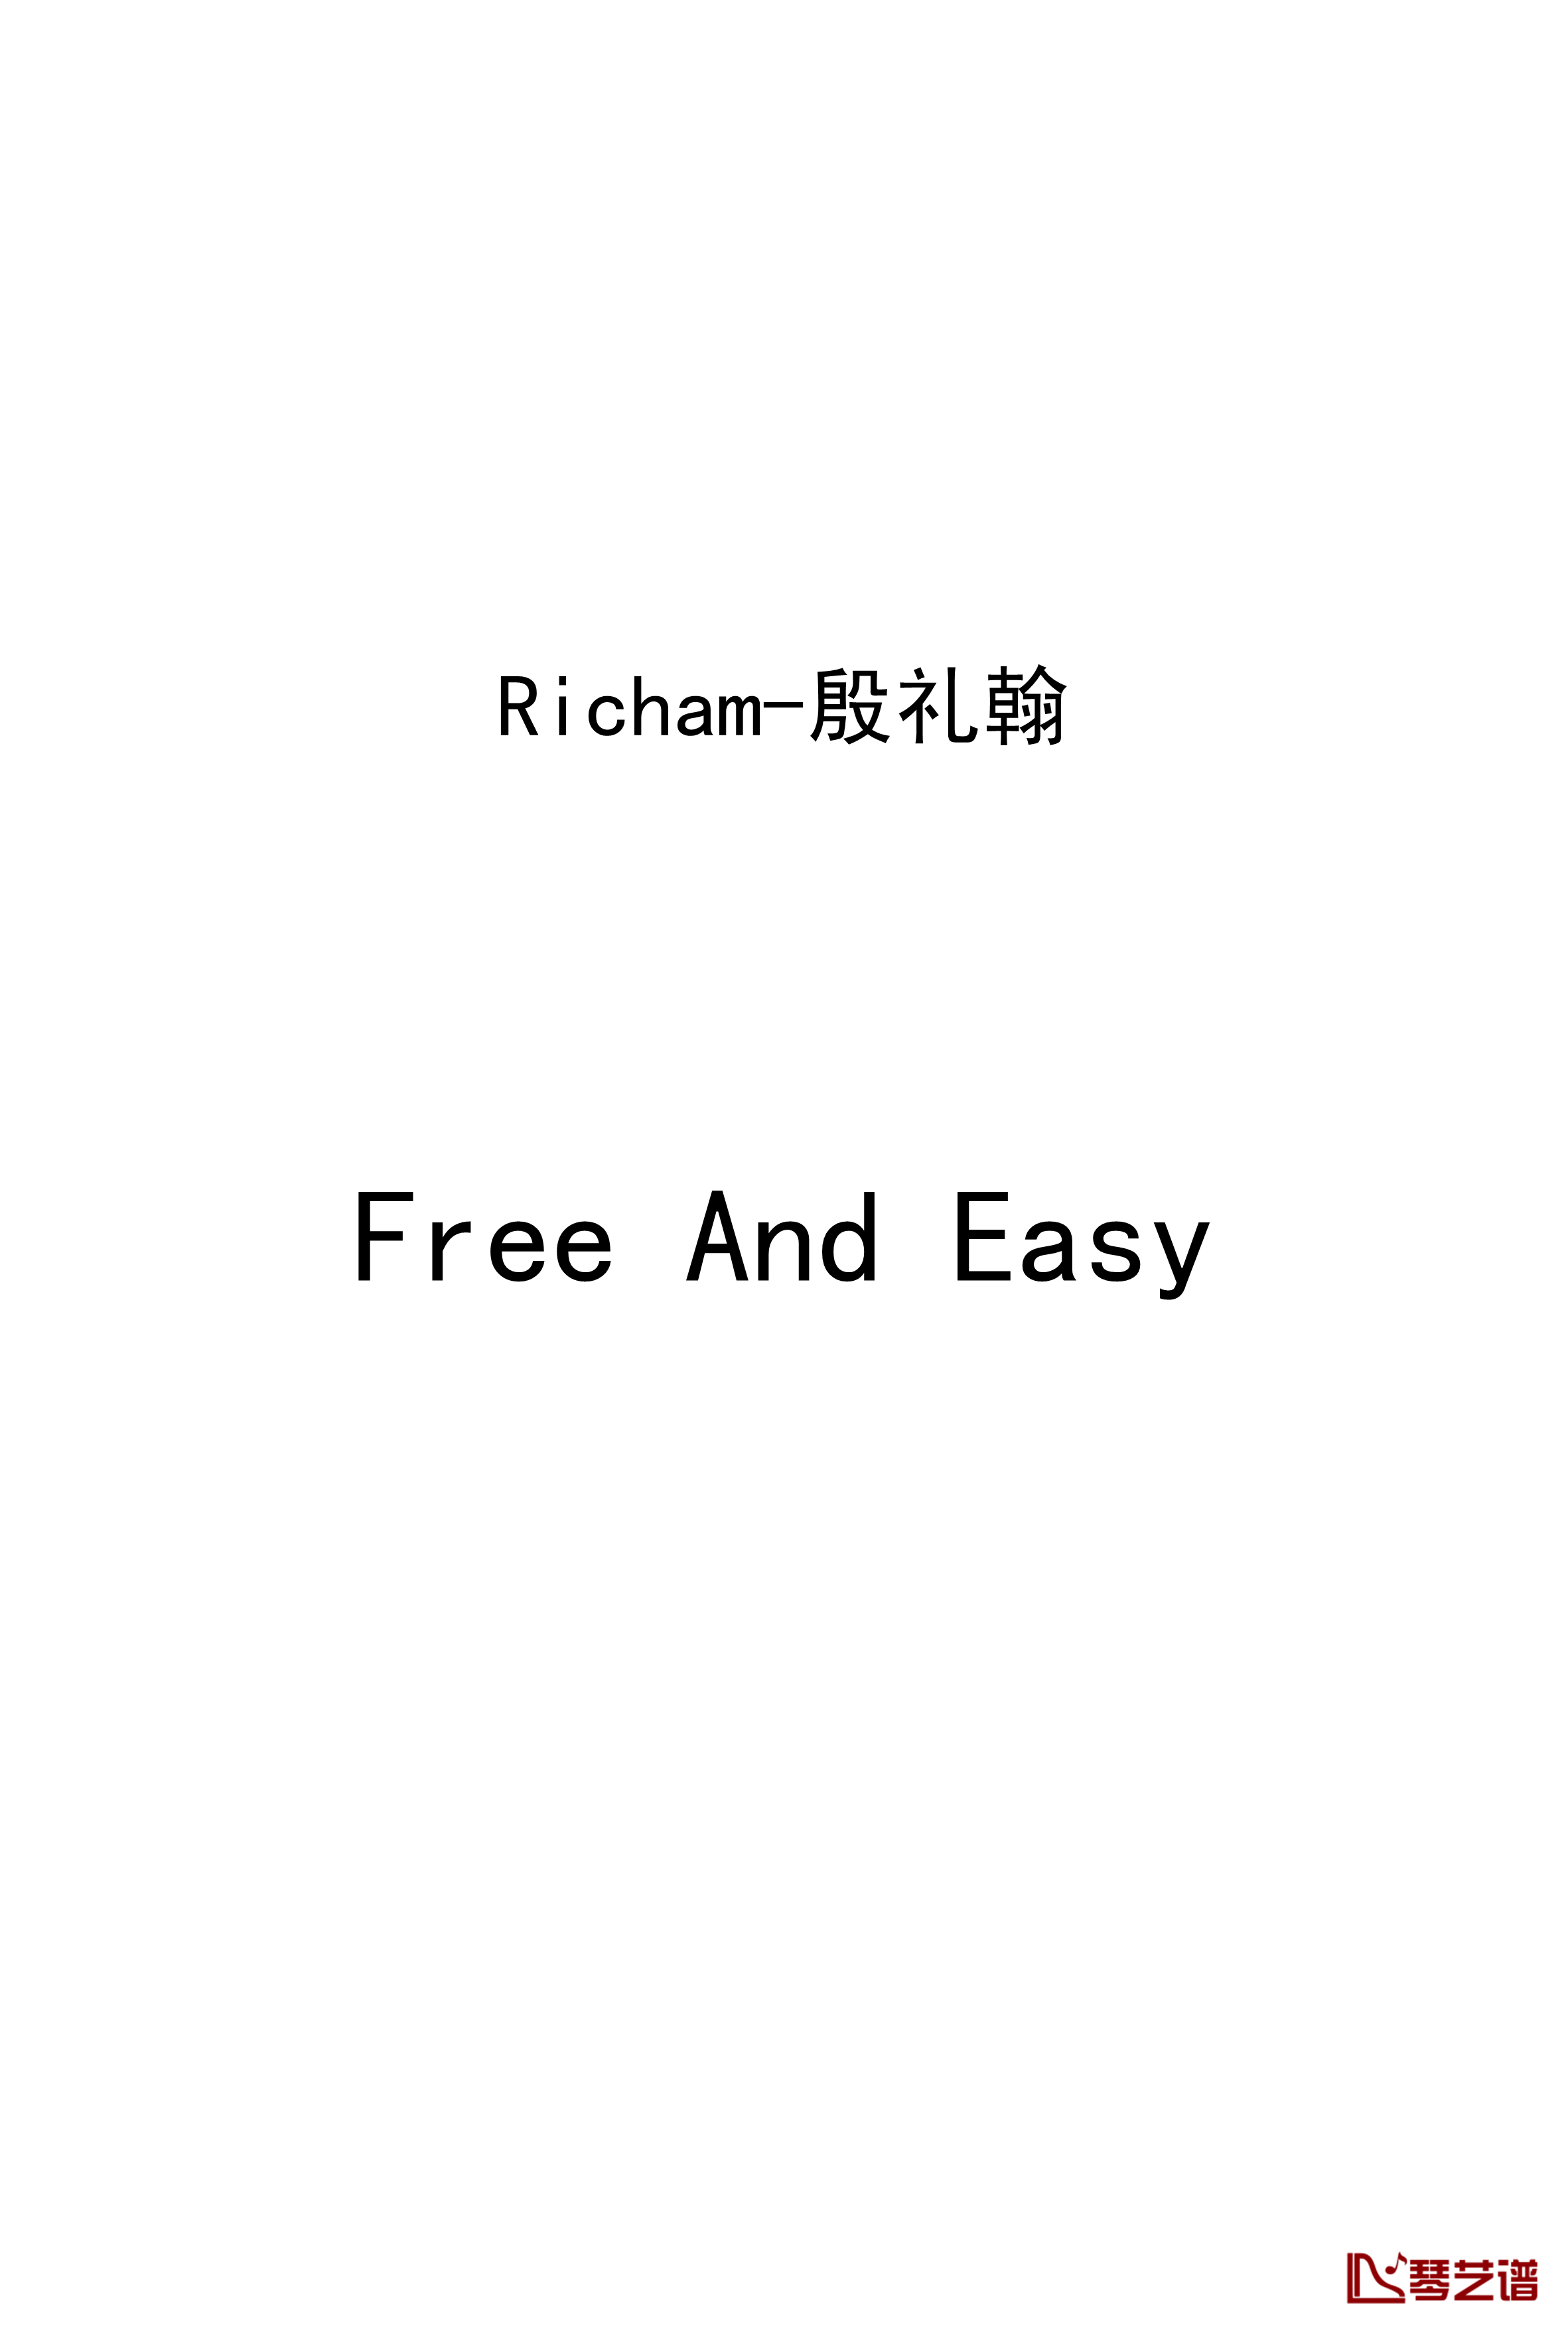 Free And Easy钢琴谱-Richam1